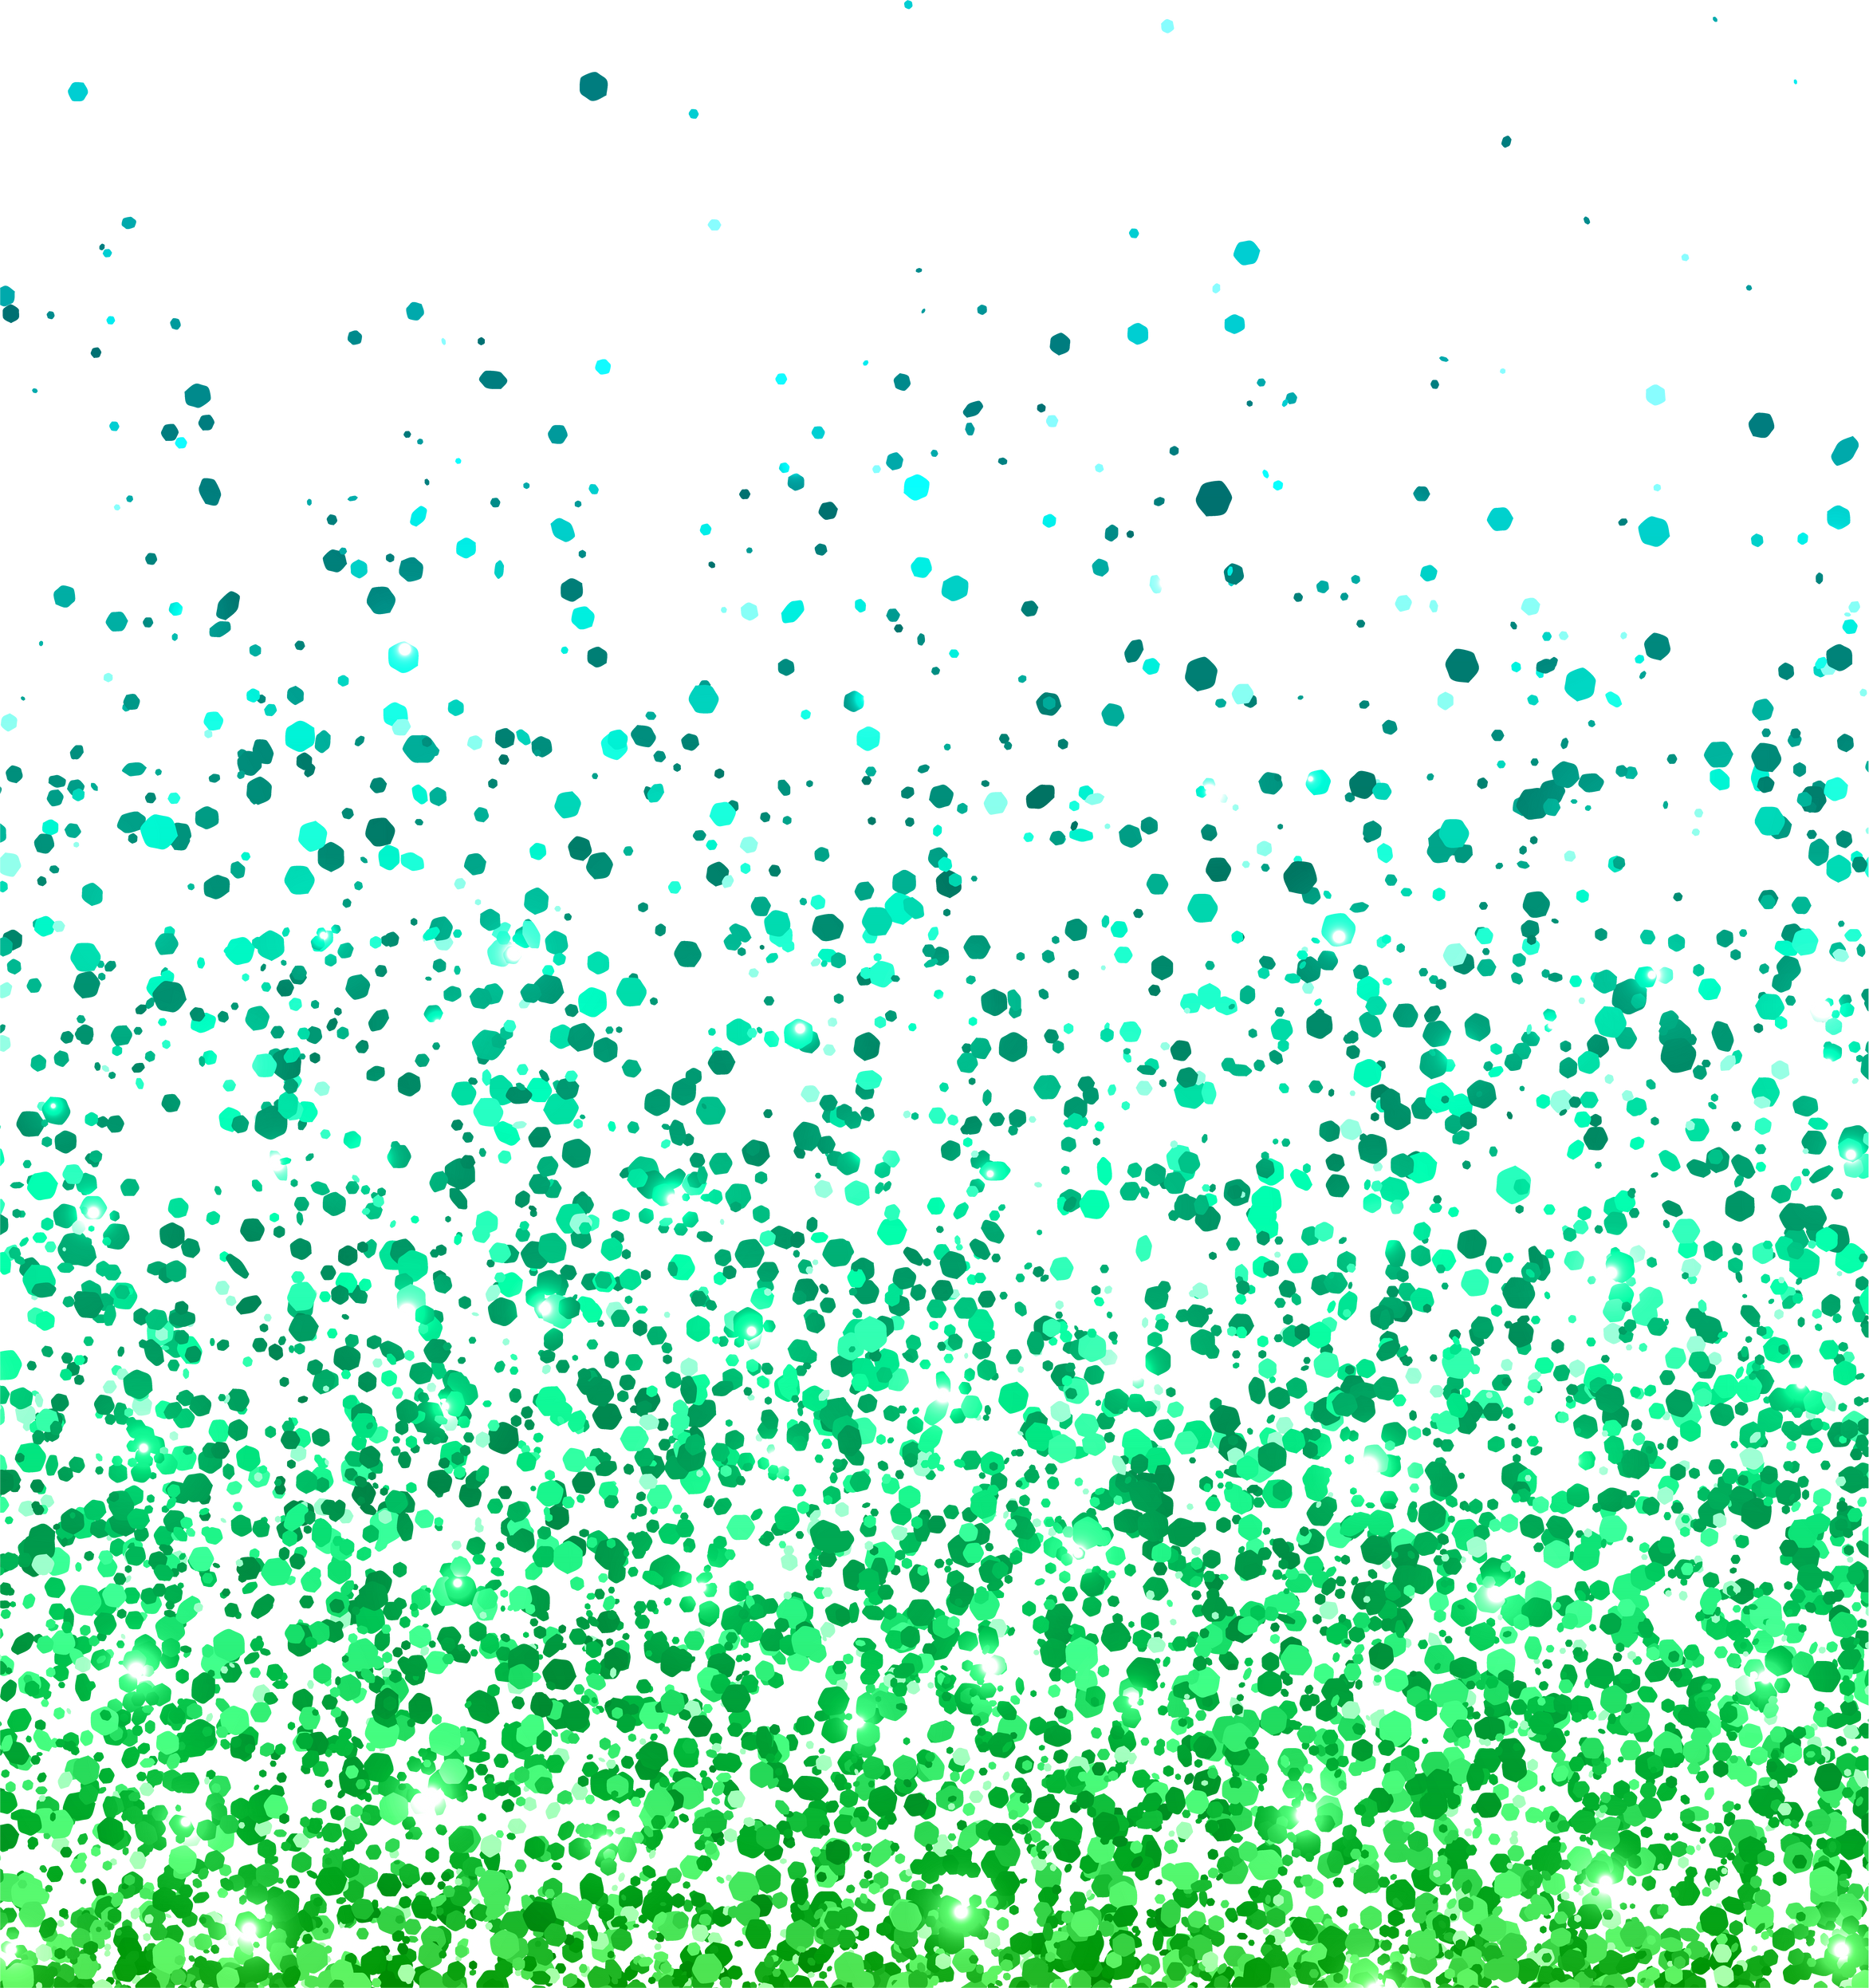 Green blue sparkling scattered glitter